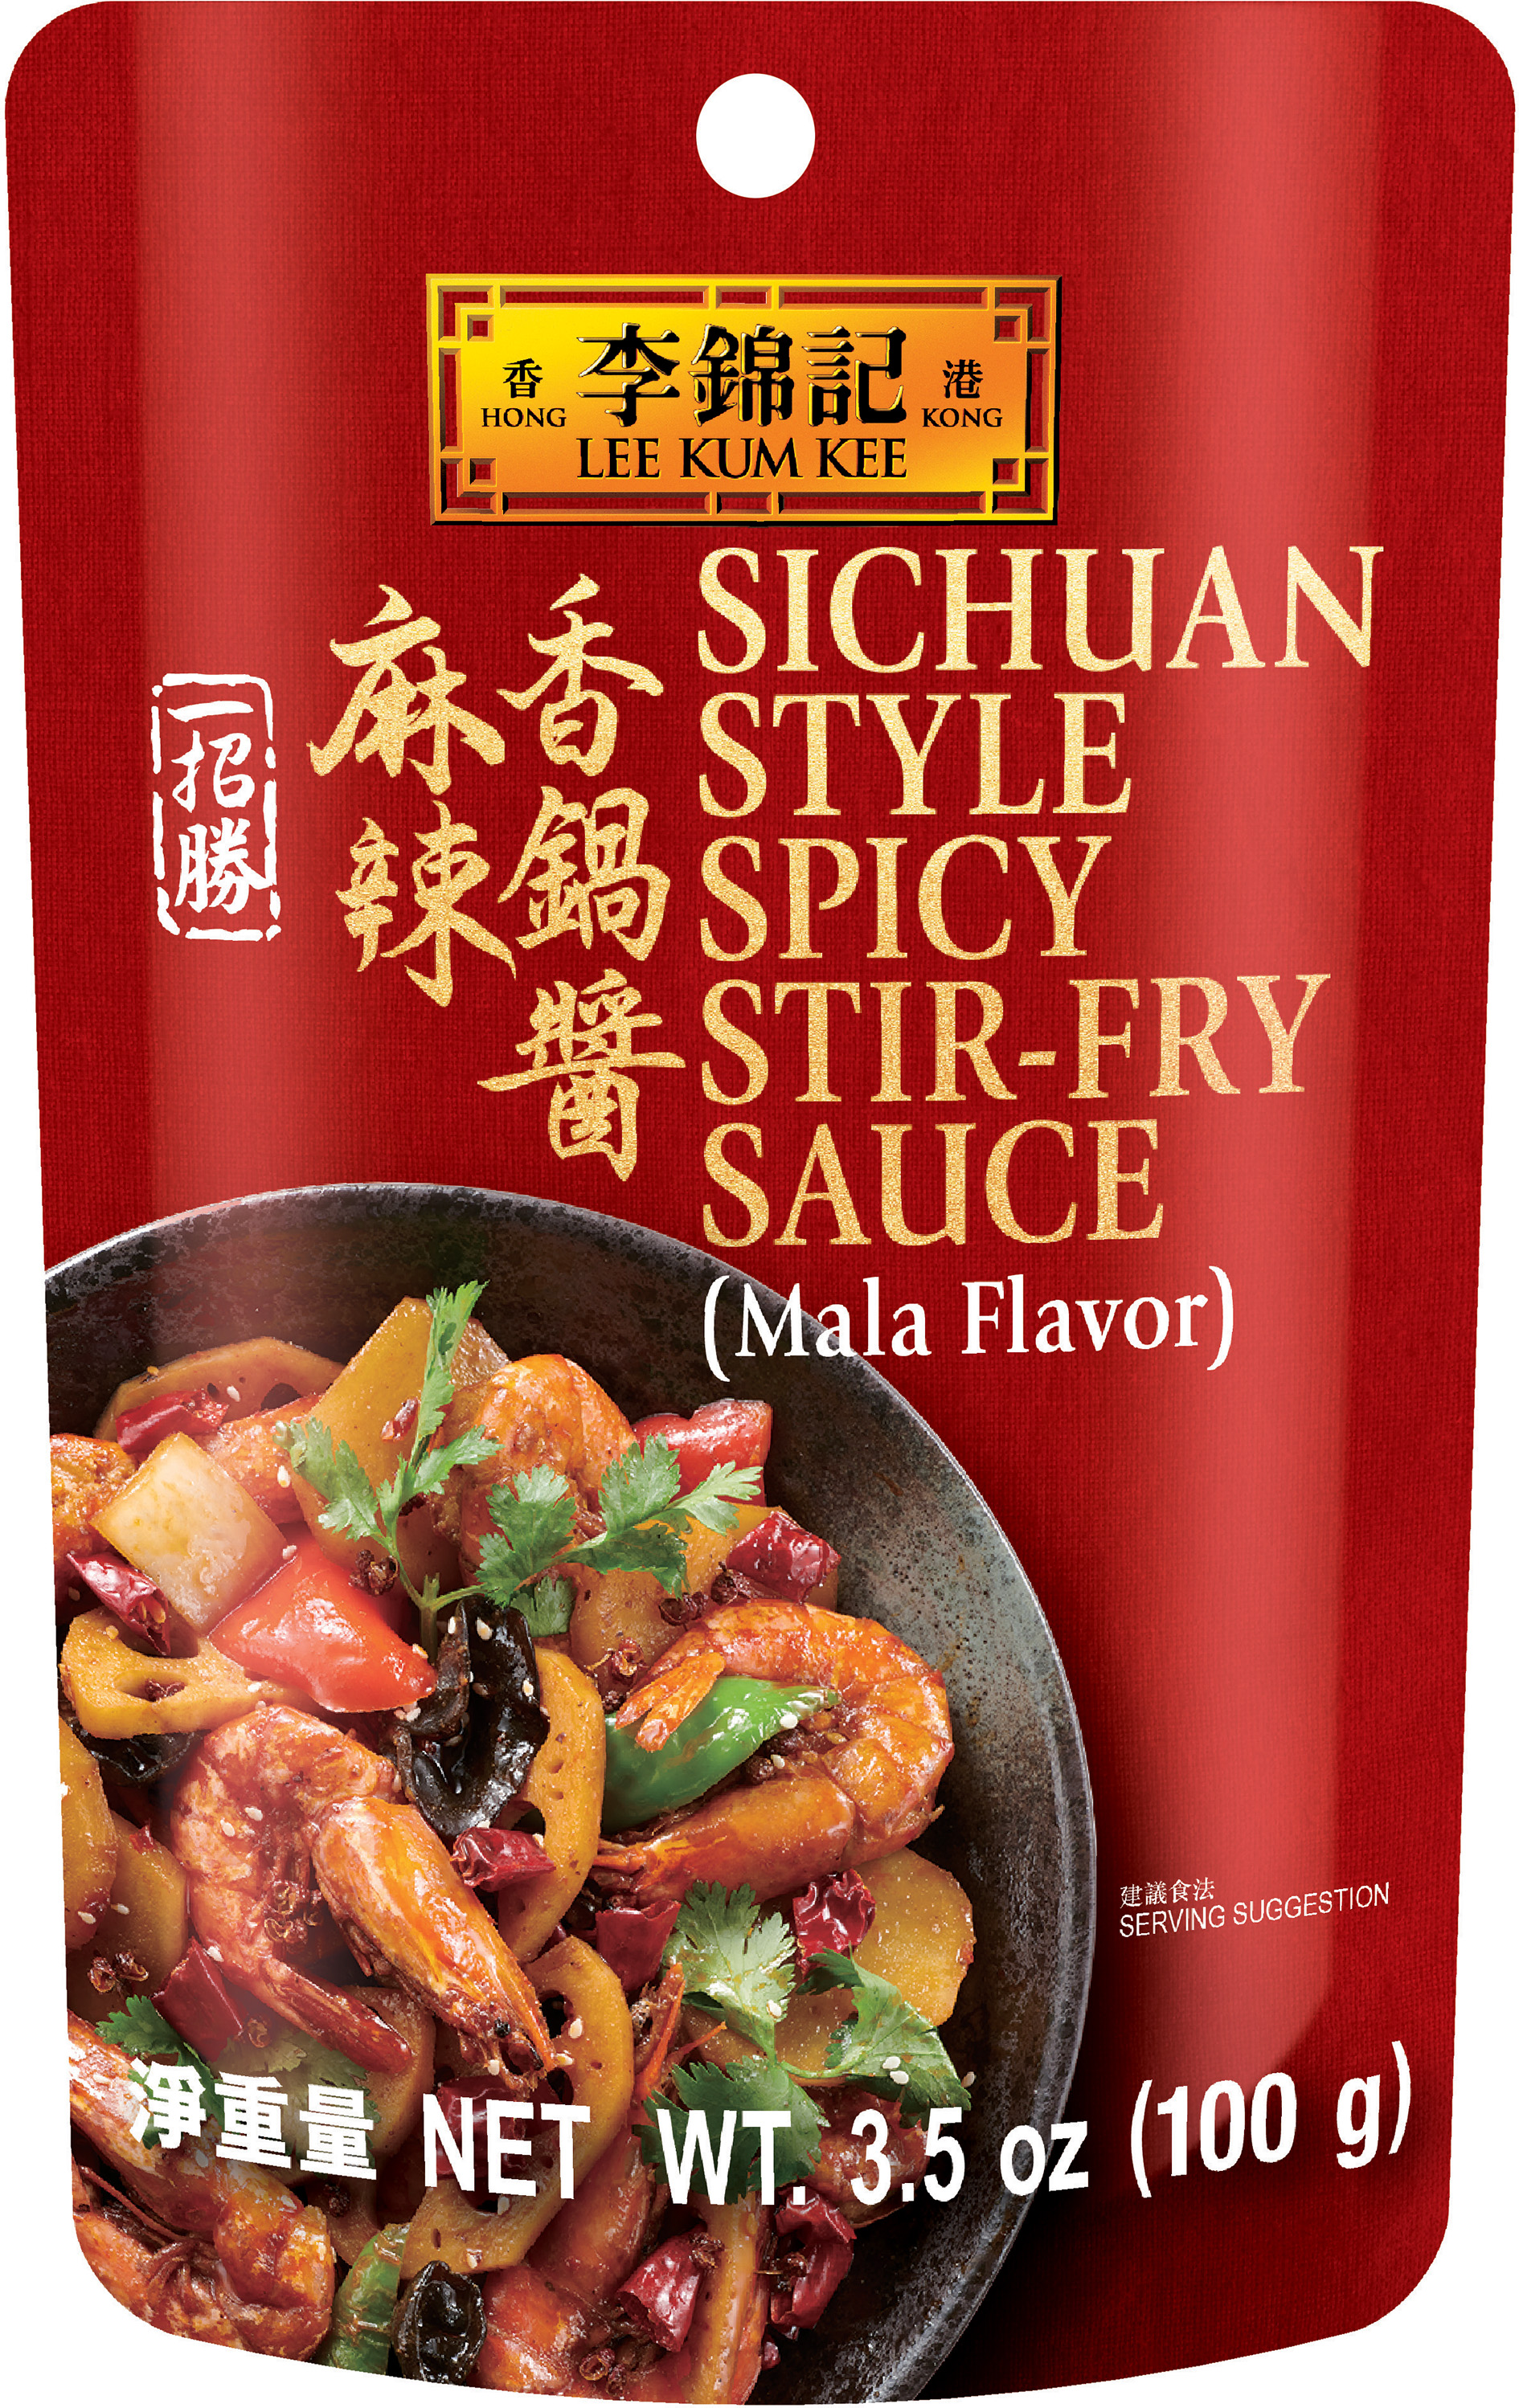 Sichuan Style Spicy Stir-Fry Sauce (Mala Flavor) 3.5 oz (100 g) Sauce Pack